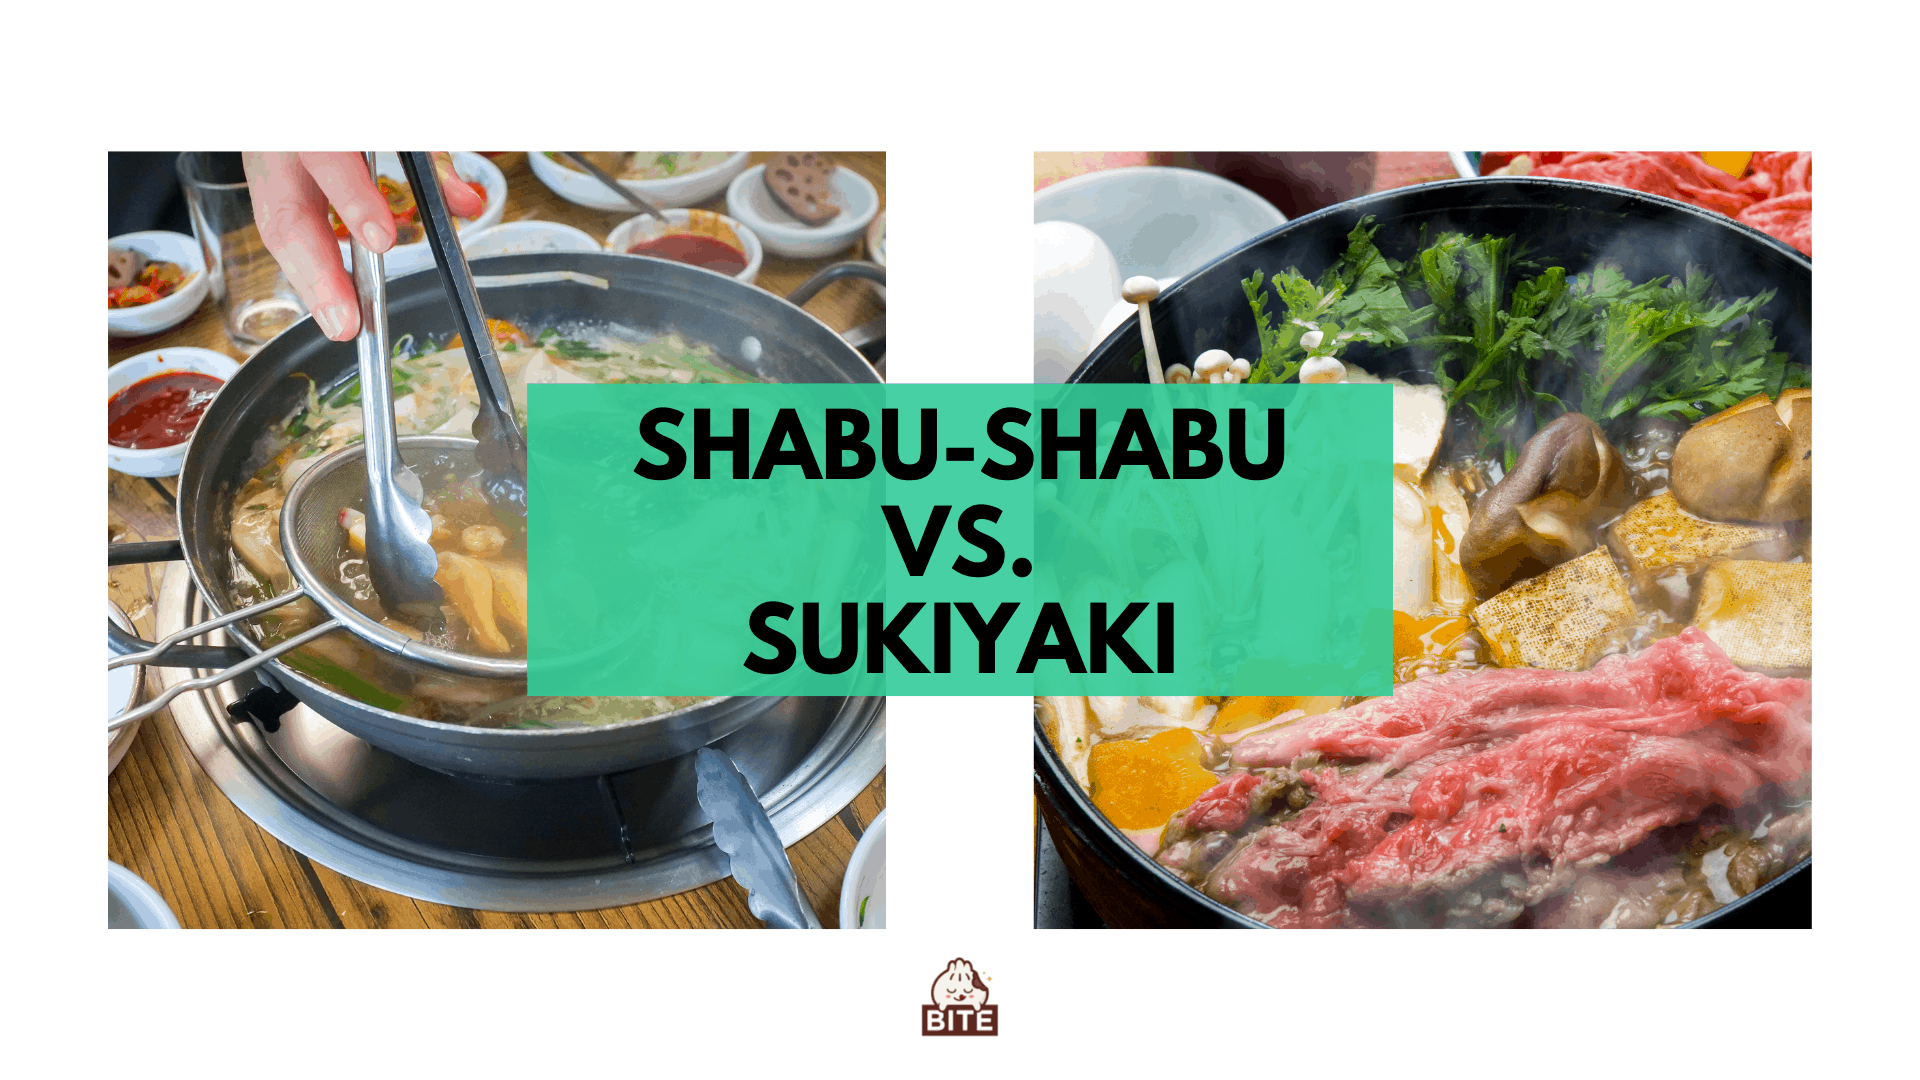 Shabu-shabu vs. sukiyaki | Both hot pot dishes but with a different twist